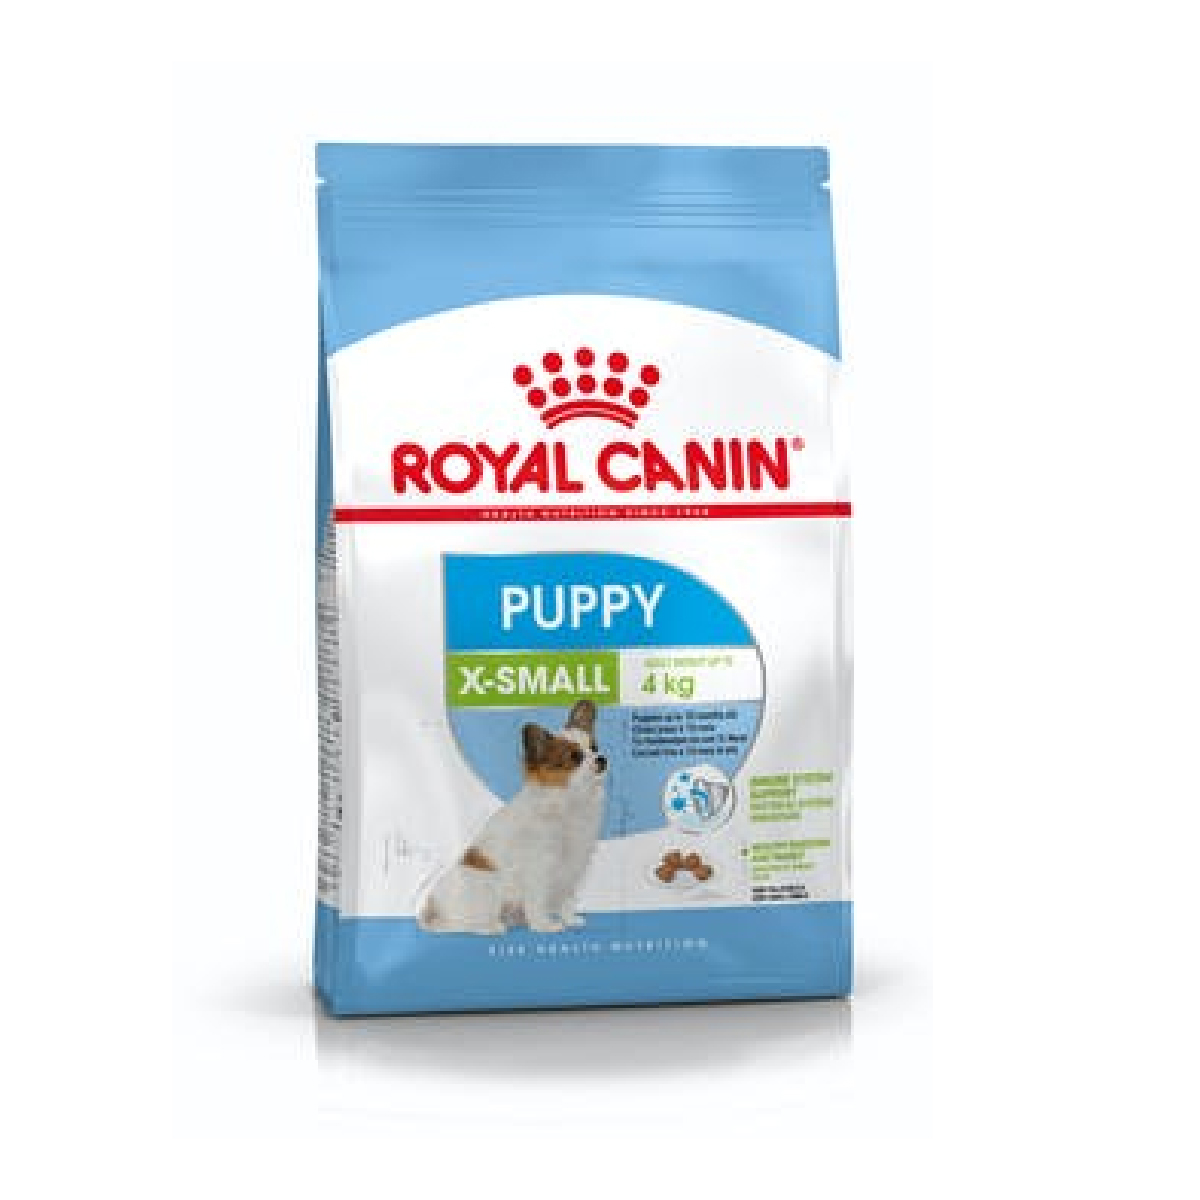 Royal Canin X-Small Puppy สำหรับลูกสุนัขพันธุ์เล็ก